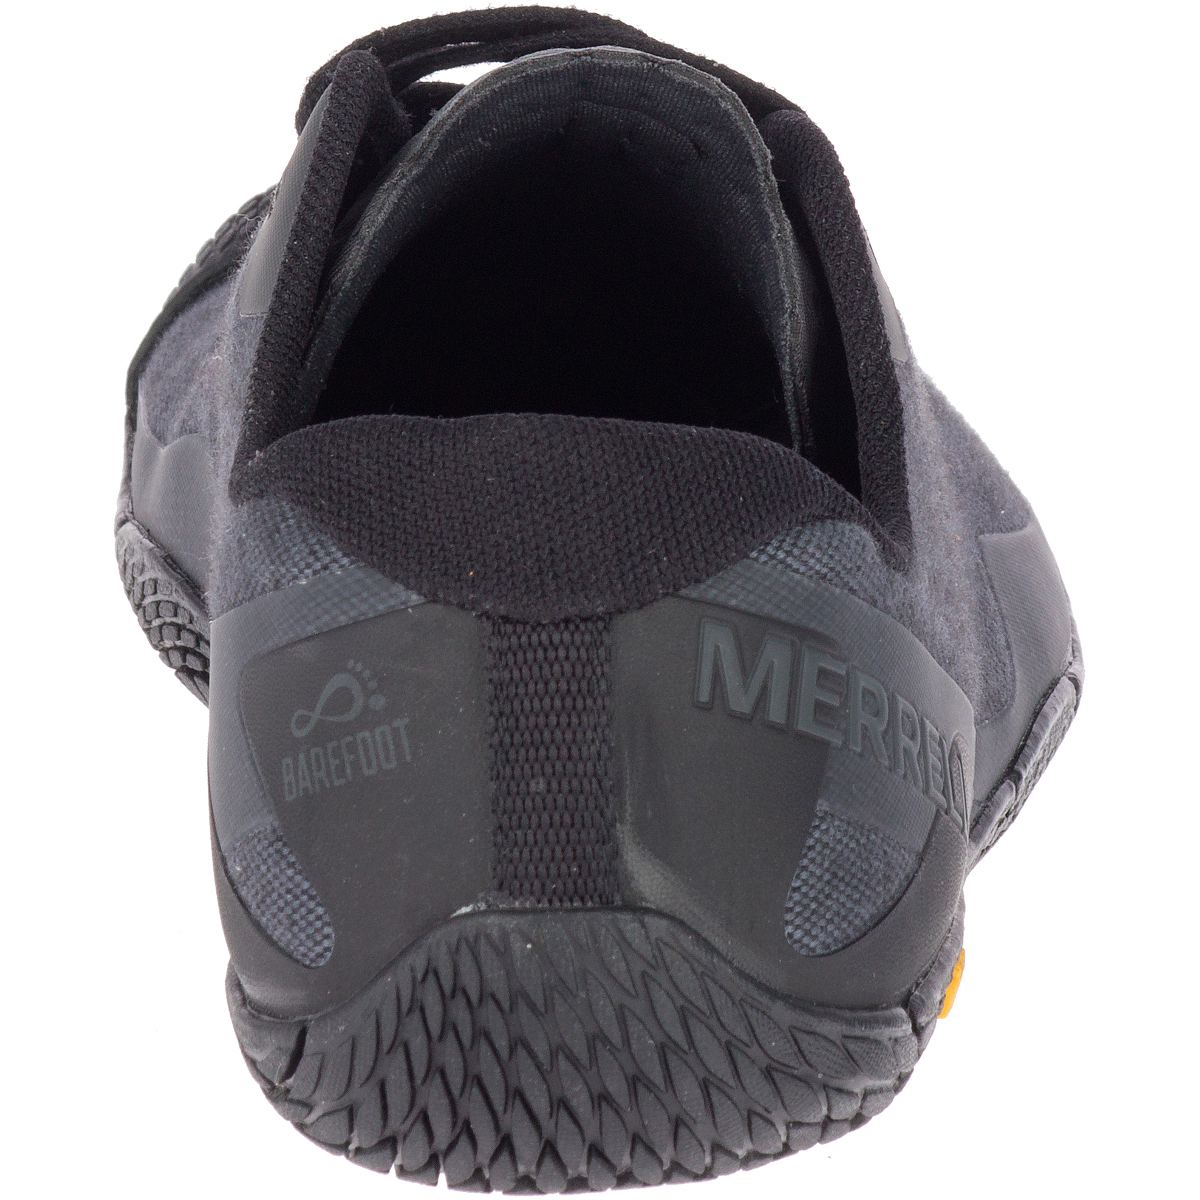 Merrell Vapor Glove 3 Cotton - Zapatos Barefoot Hombre En Linea - Beige